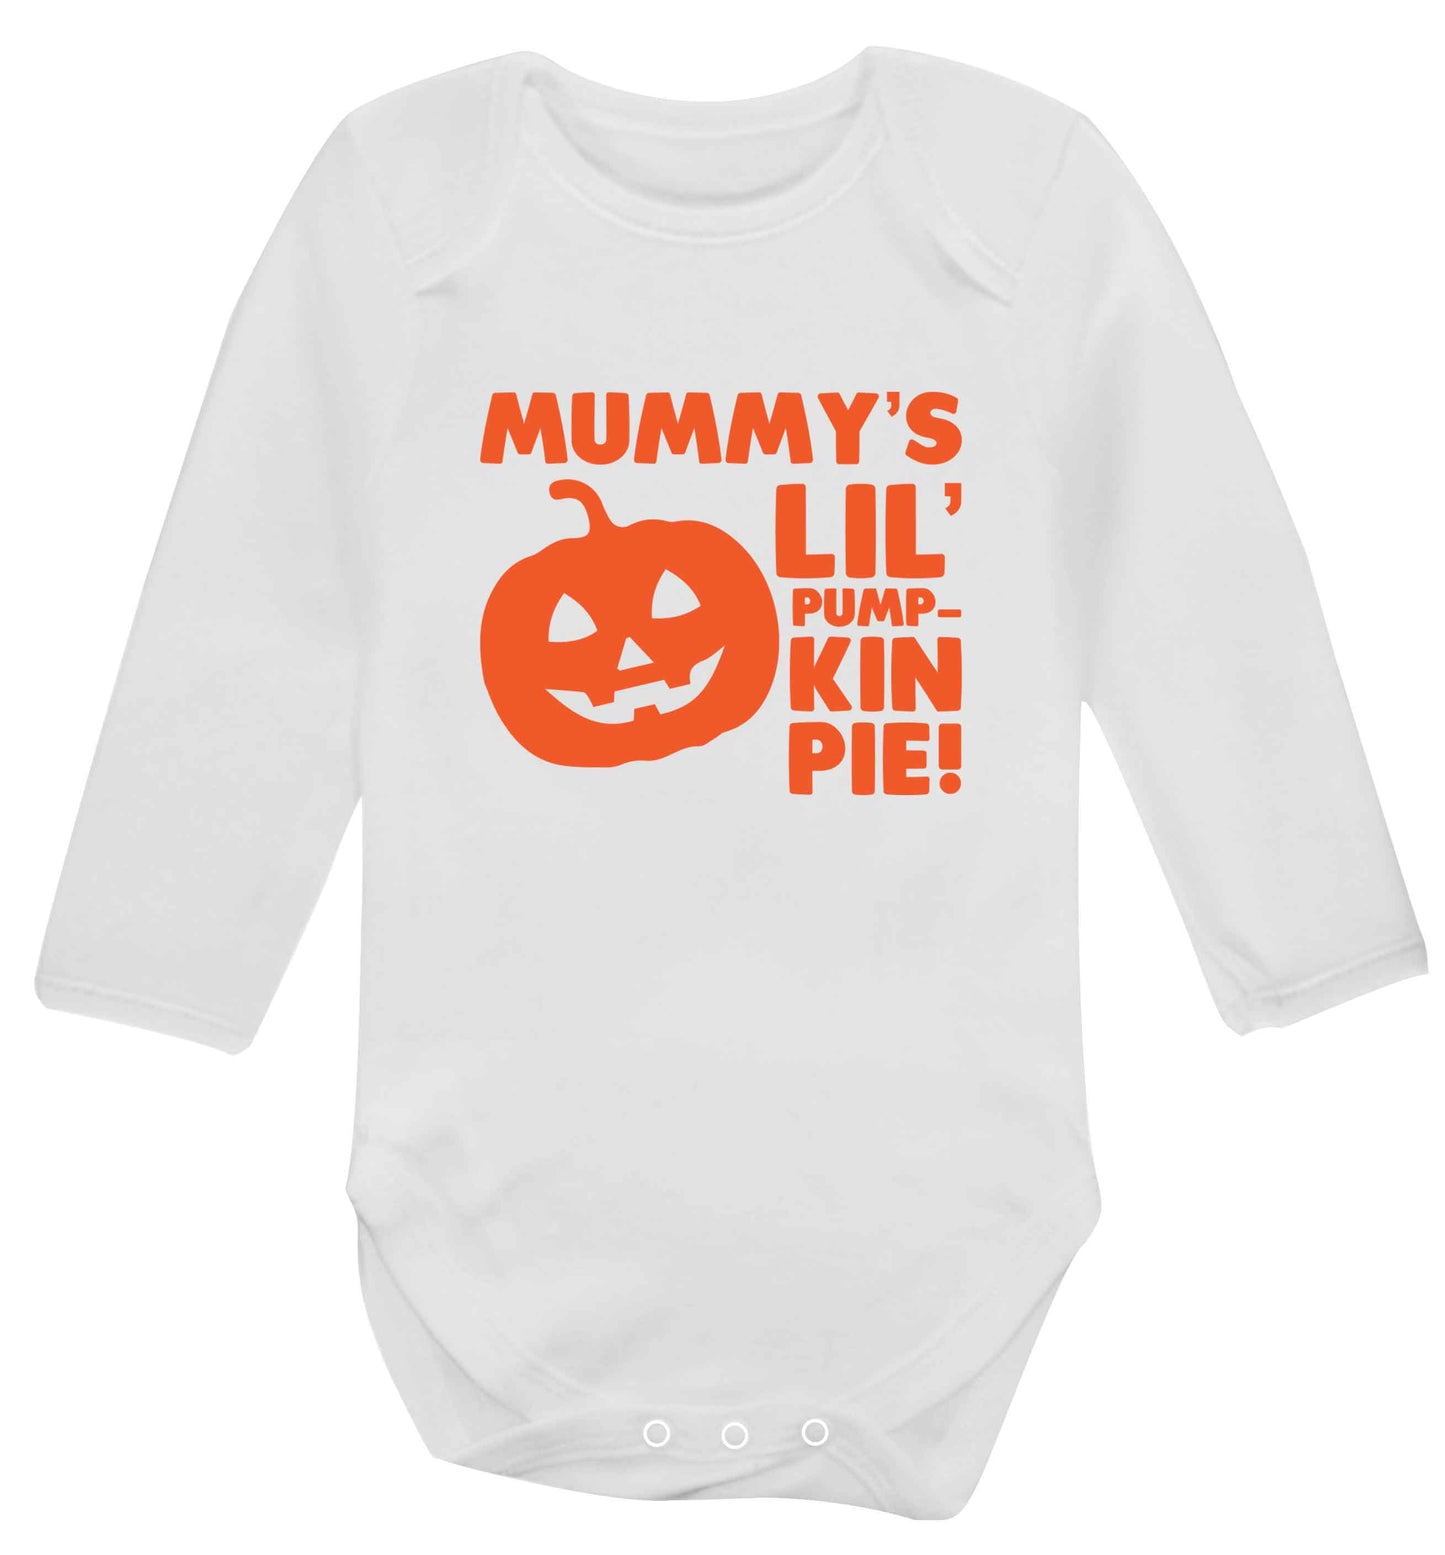 Mummy's lil' pumpkin pie baby vest long sleeved white 6-12 months